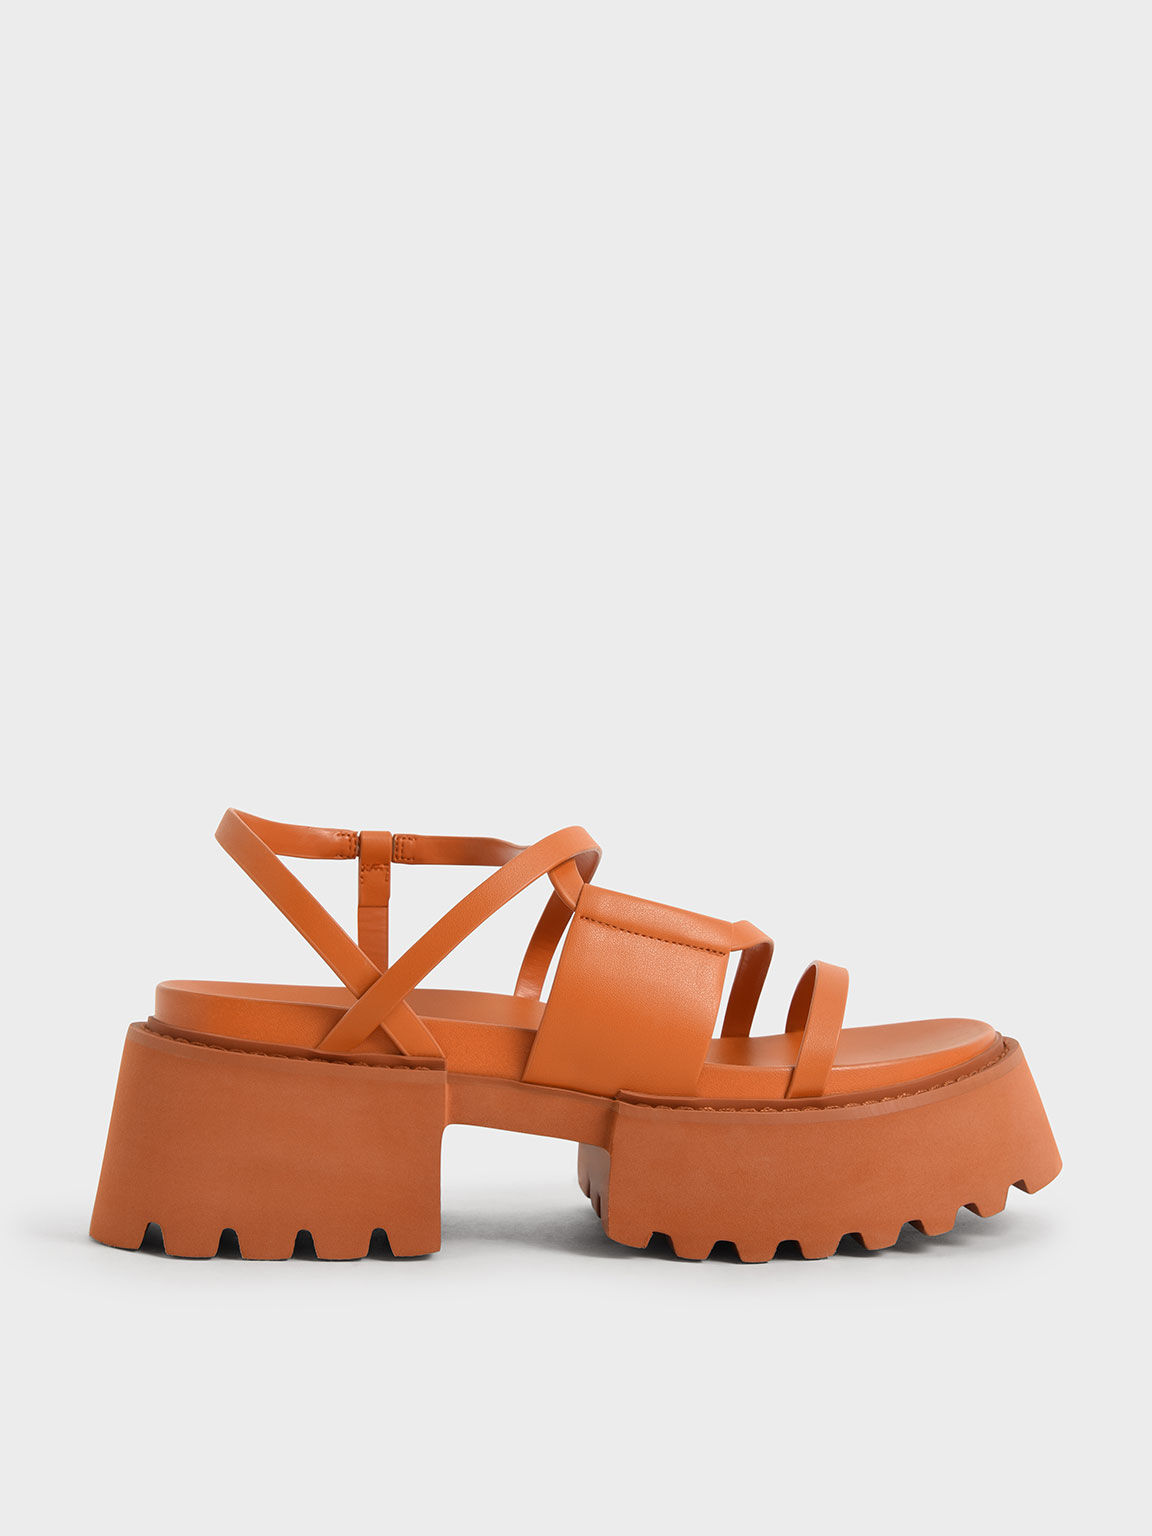 Eeken Grey-Orange Lightweight Sandal For Men By Paragon